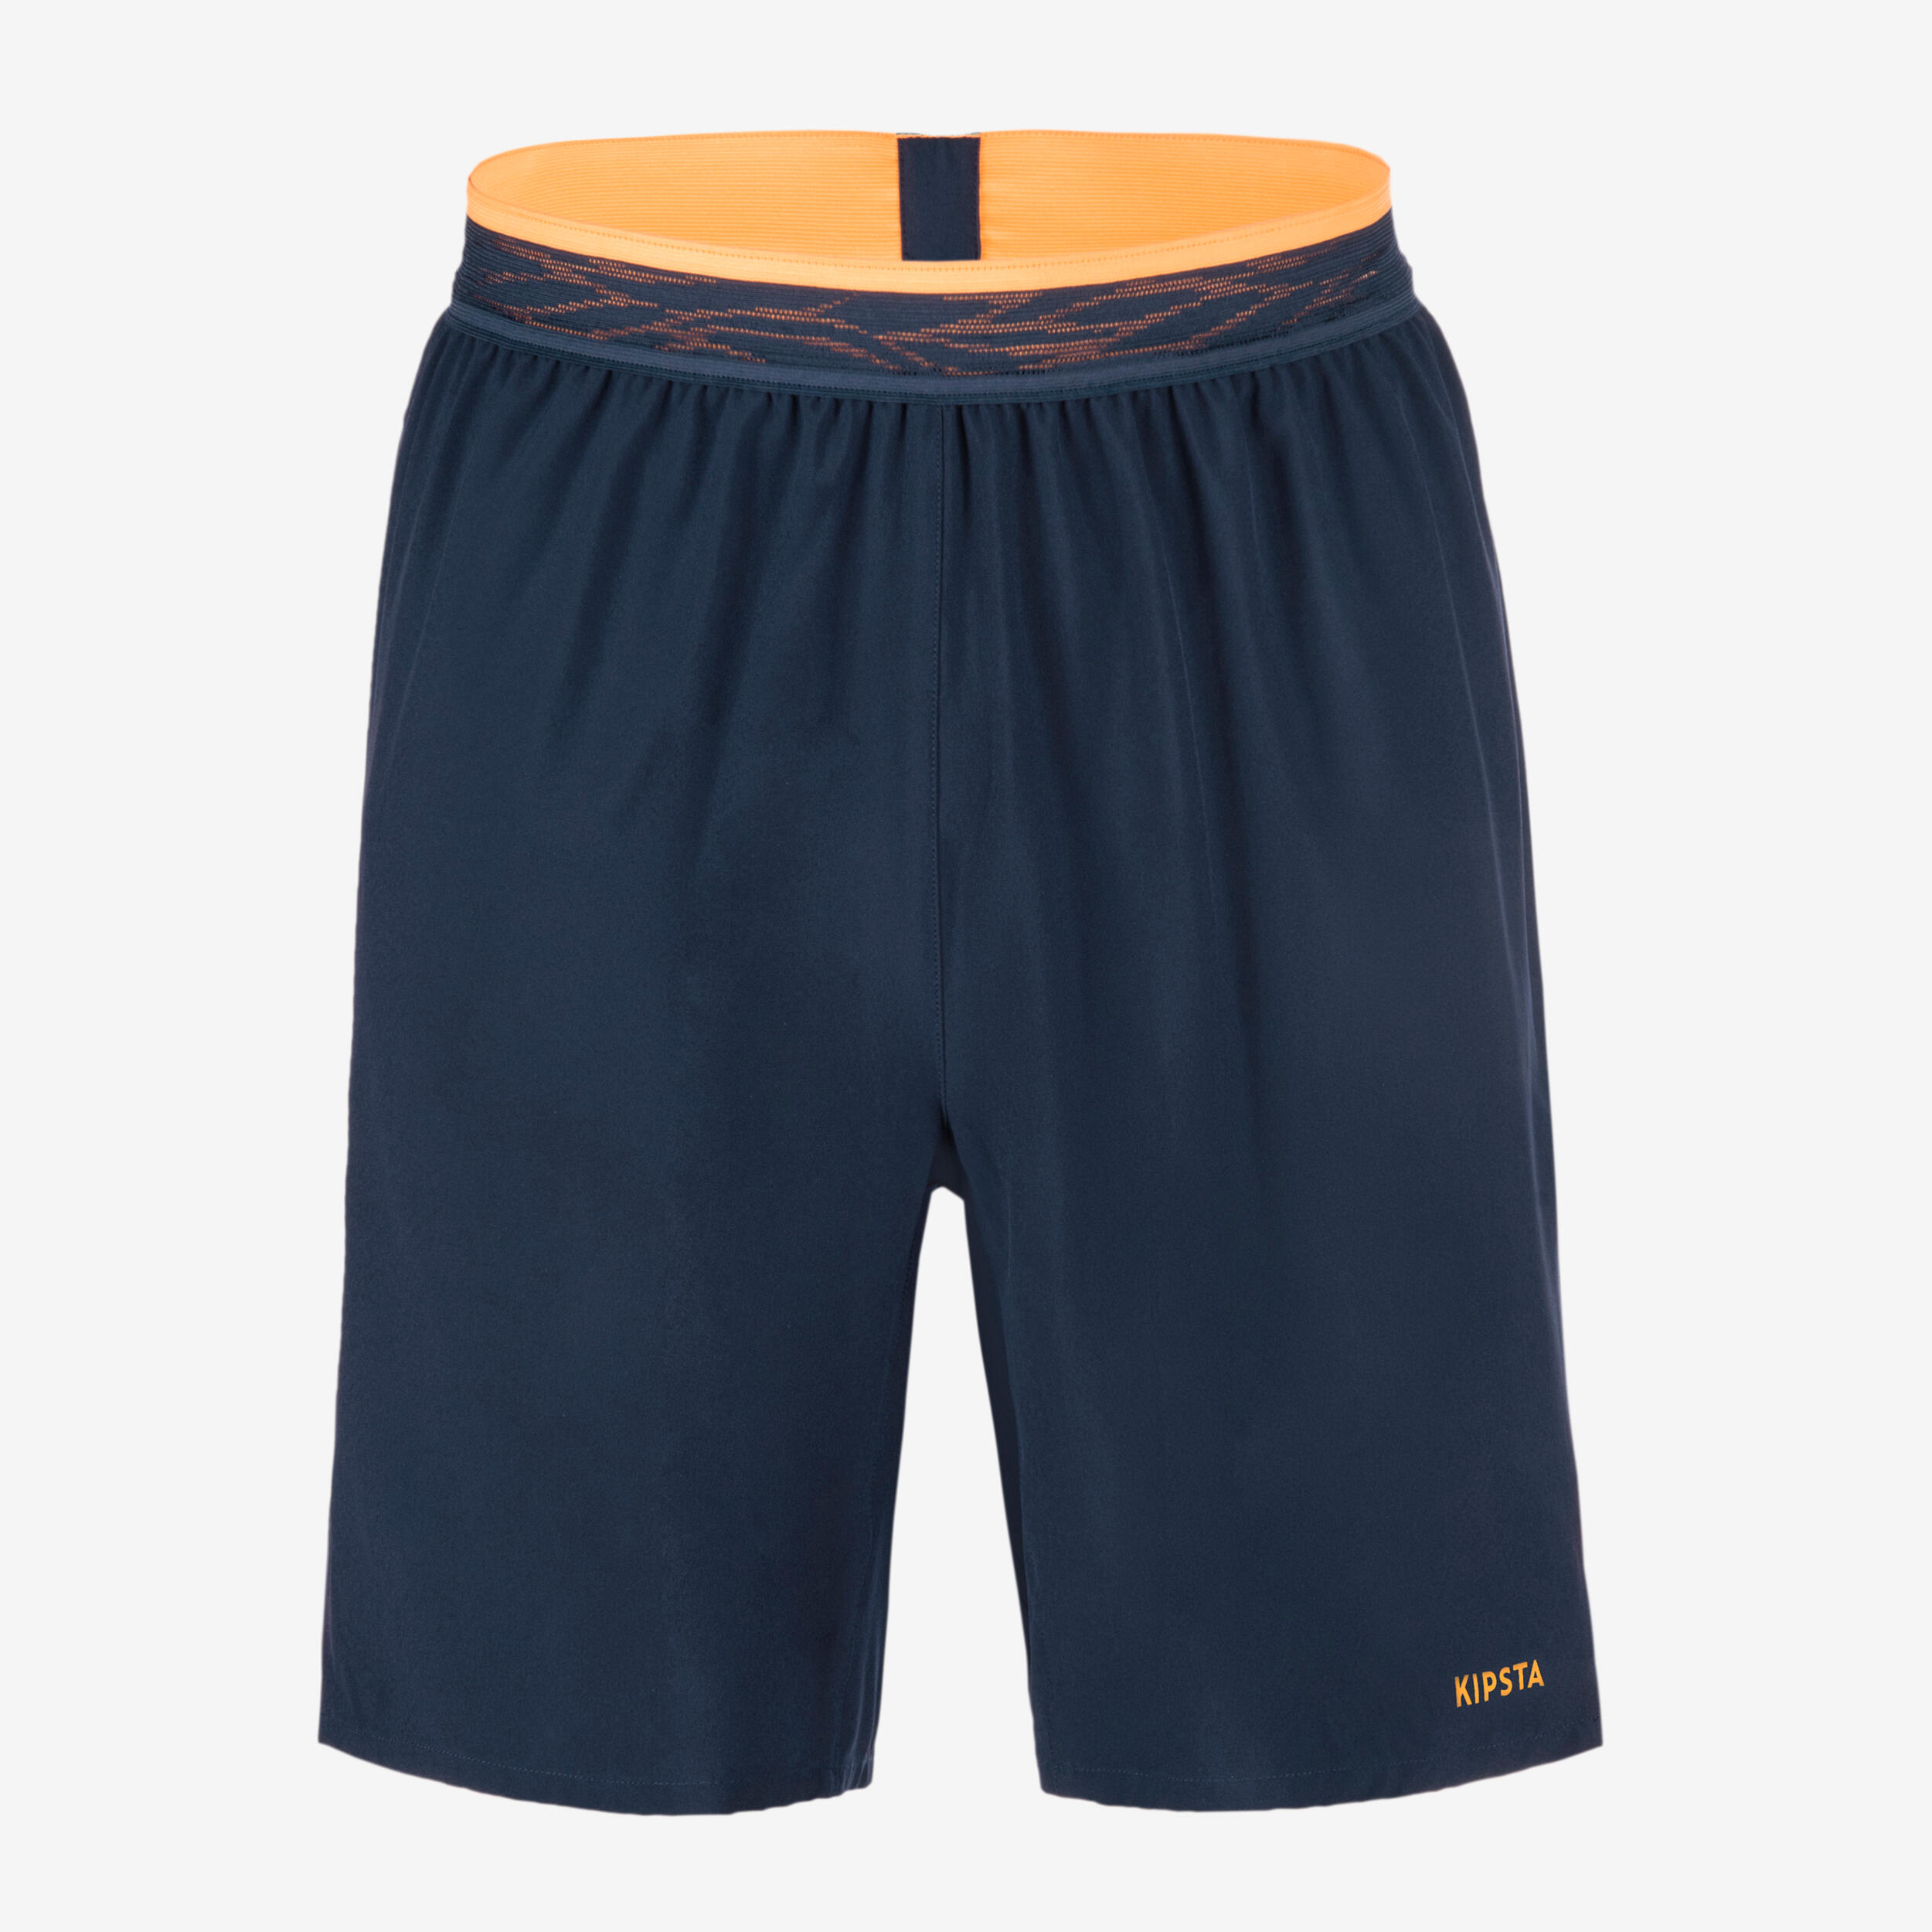 KIPSTA Adult Football Shorts CLR - Navy/Orange